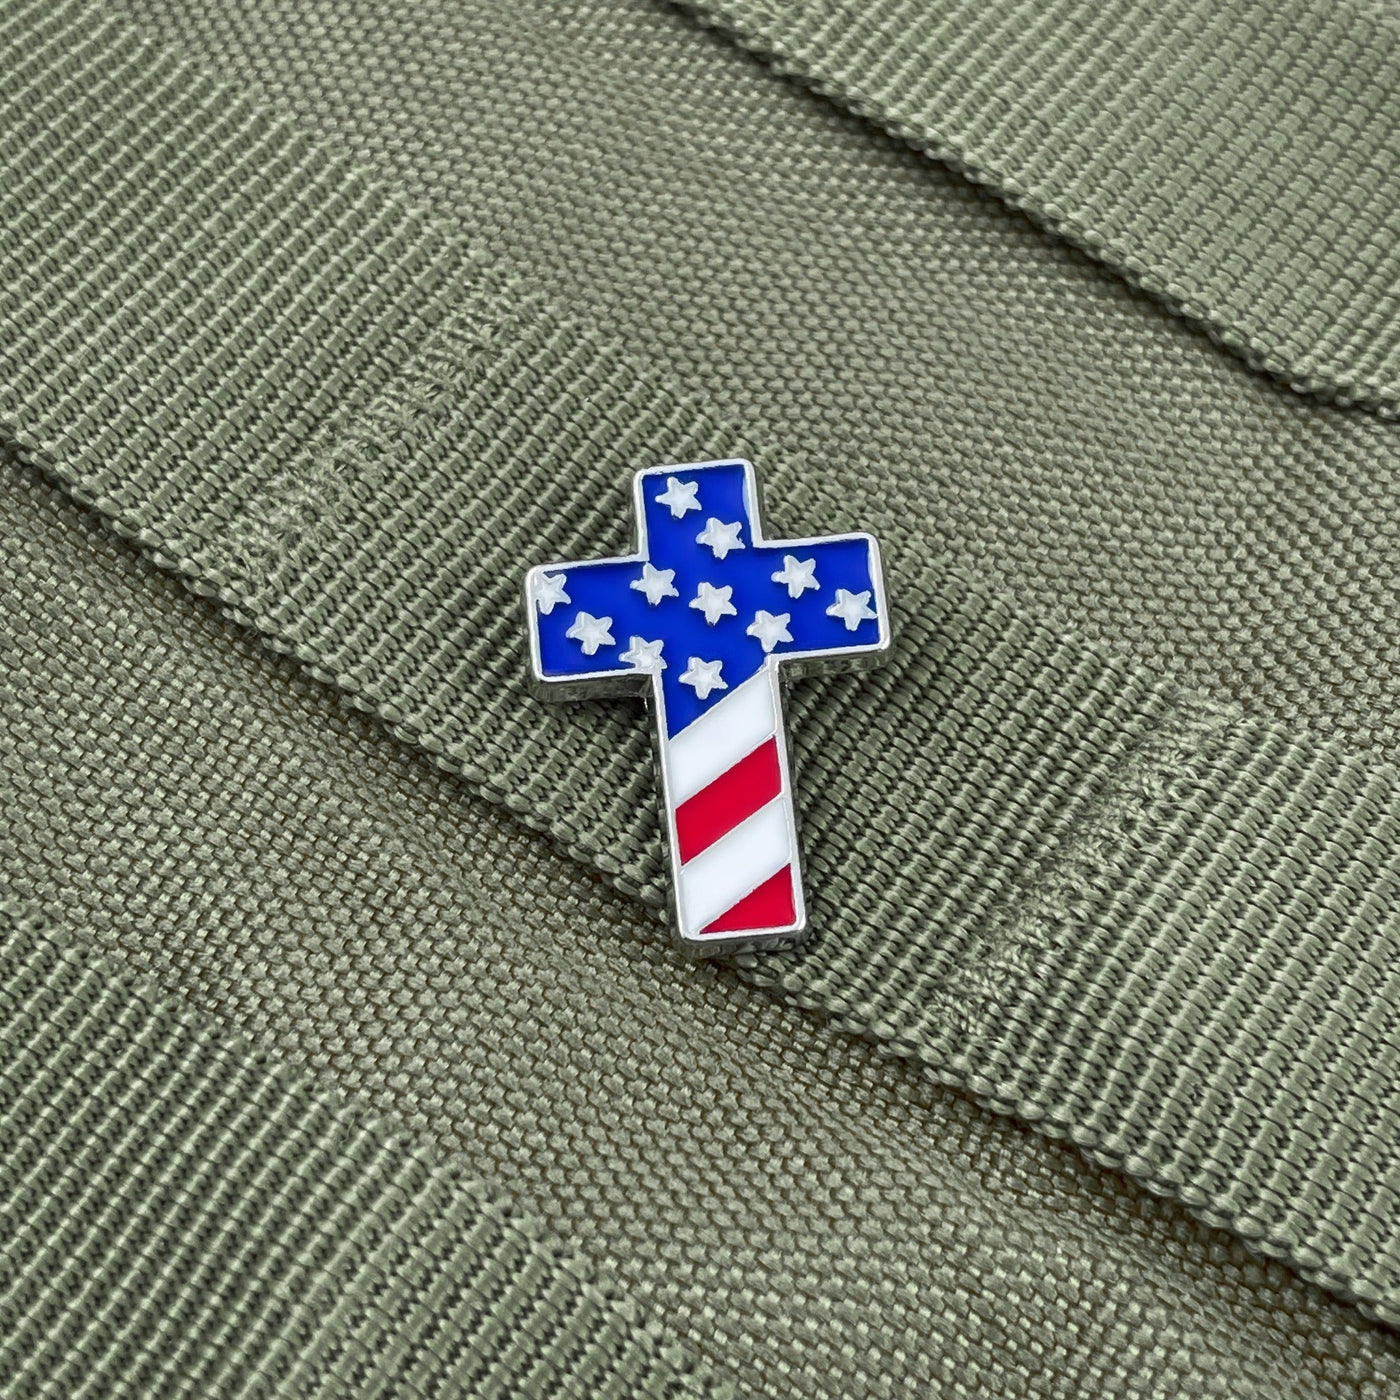 American Cross Gift Set